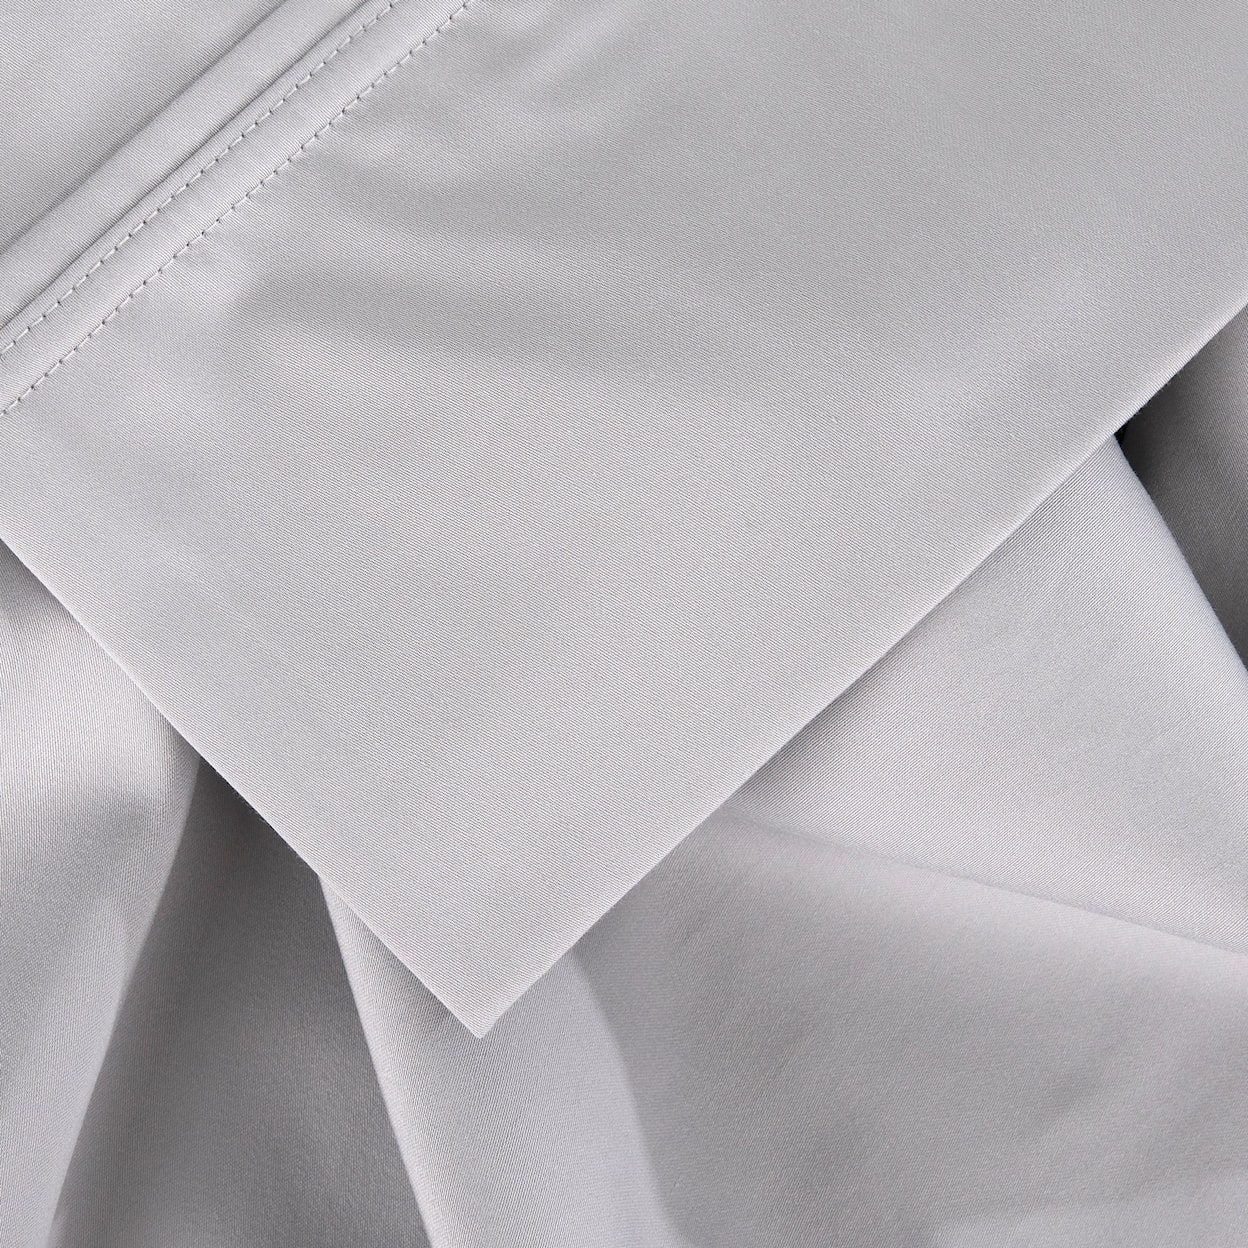 Bedgear Hyper Cotton Sheets Sheet Set,Grey, Twin XL